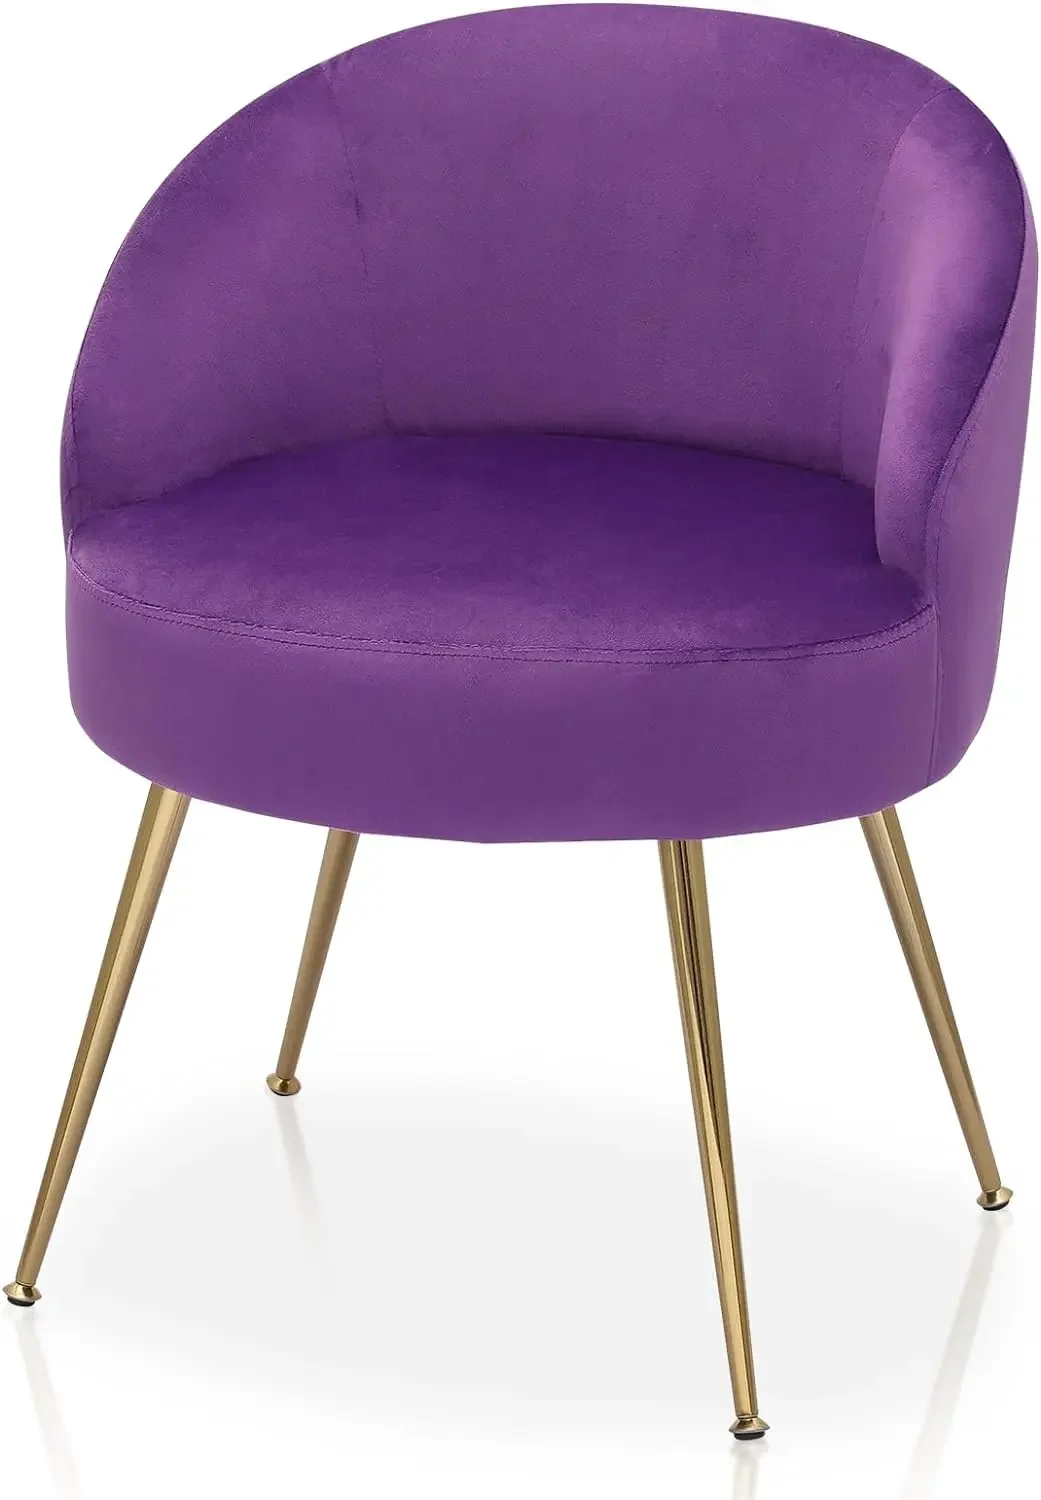 

SpaceSaving Vanity Stool Accent Chair Armchair Living Room Chair Leisure Chairs Makeup Bathroom Seat Wood Legs Velvet Chair